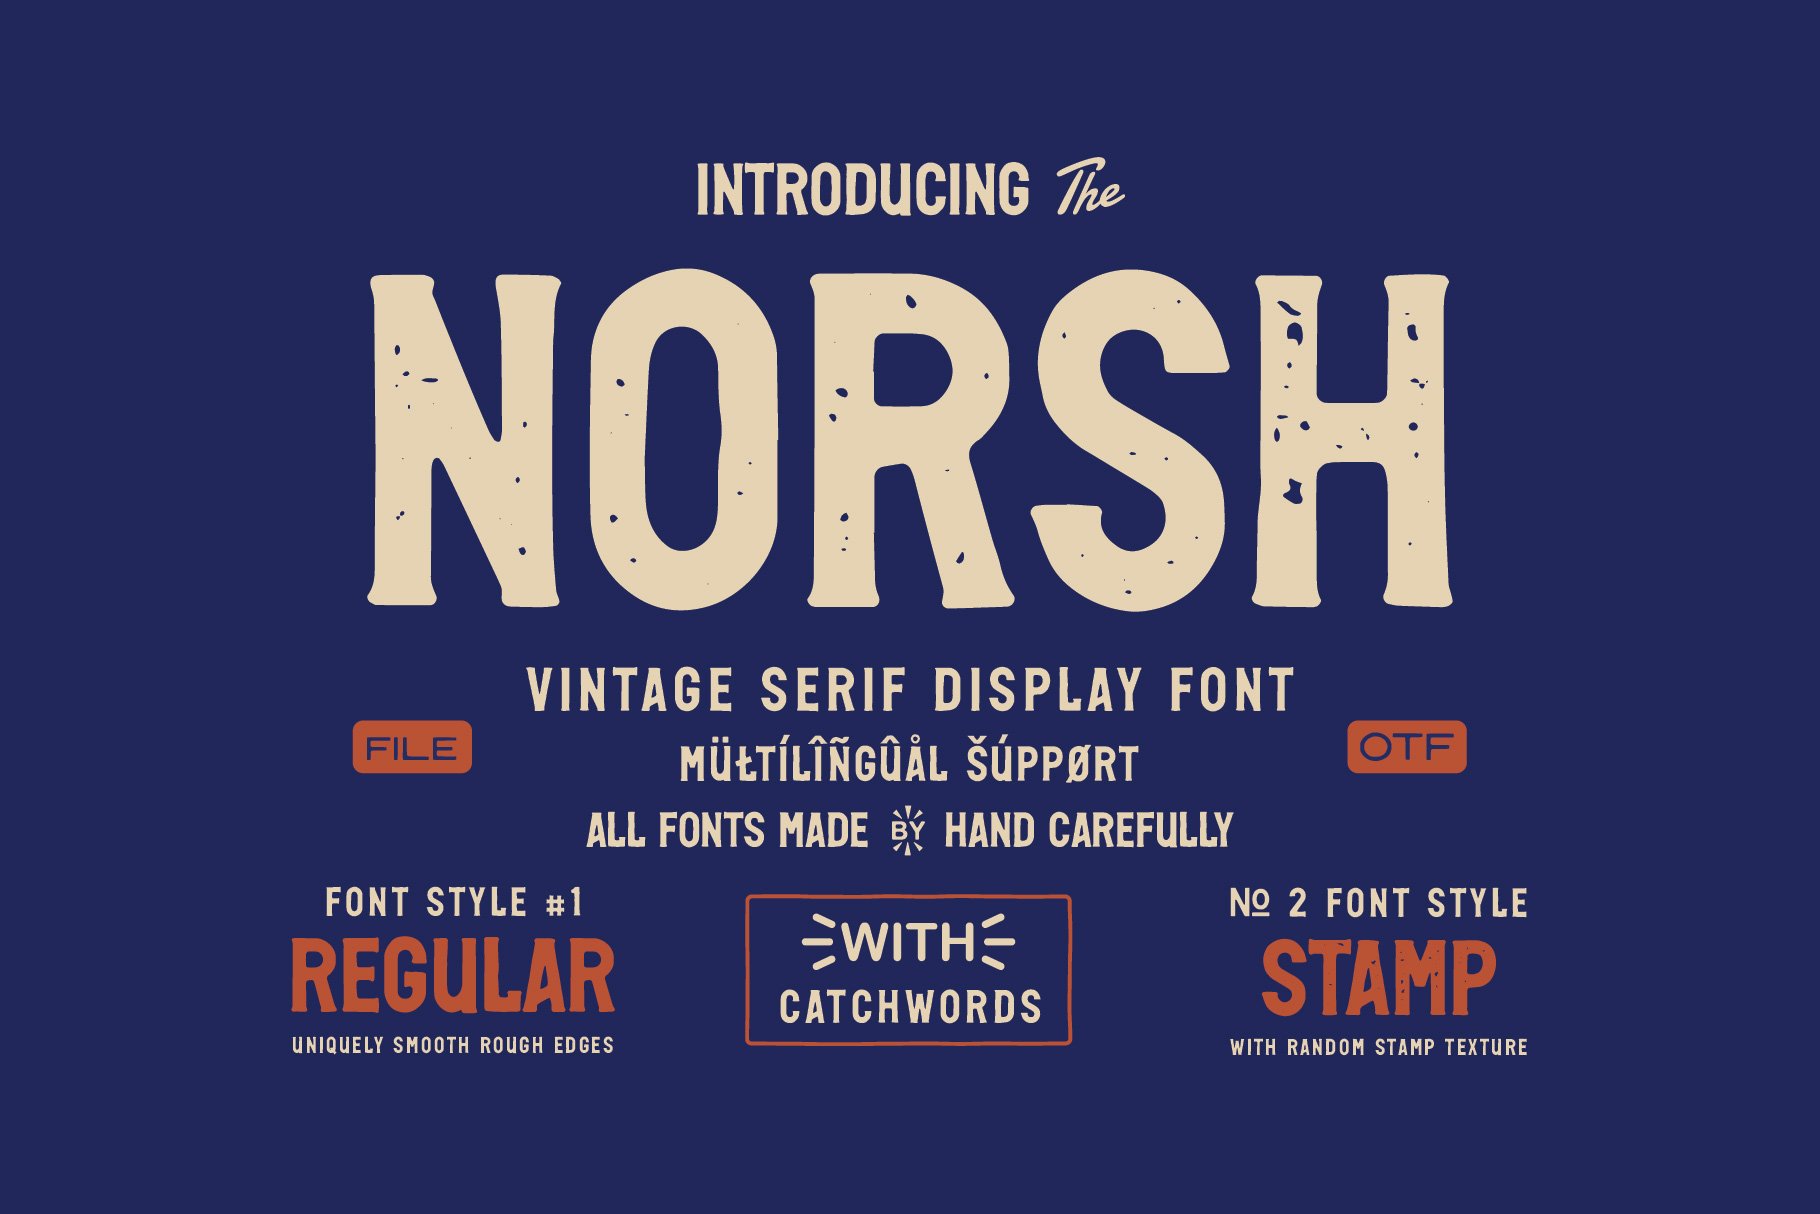 NORSH - A Vintage Display Font cover image.